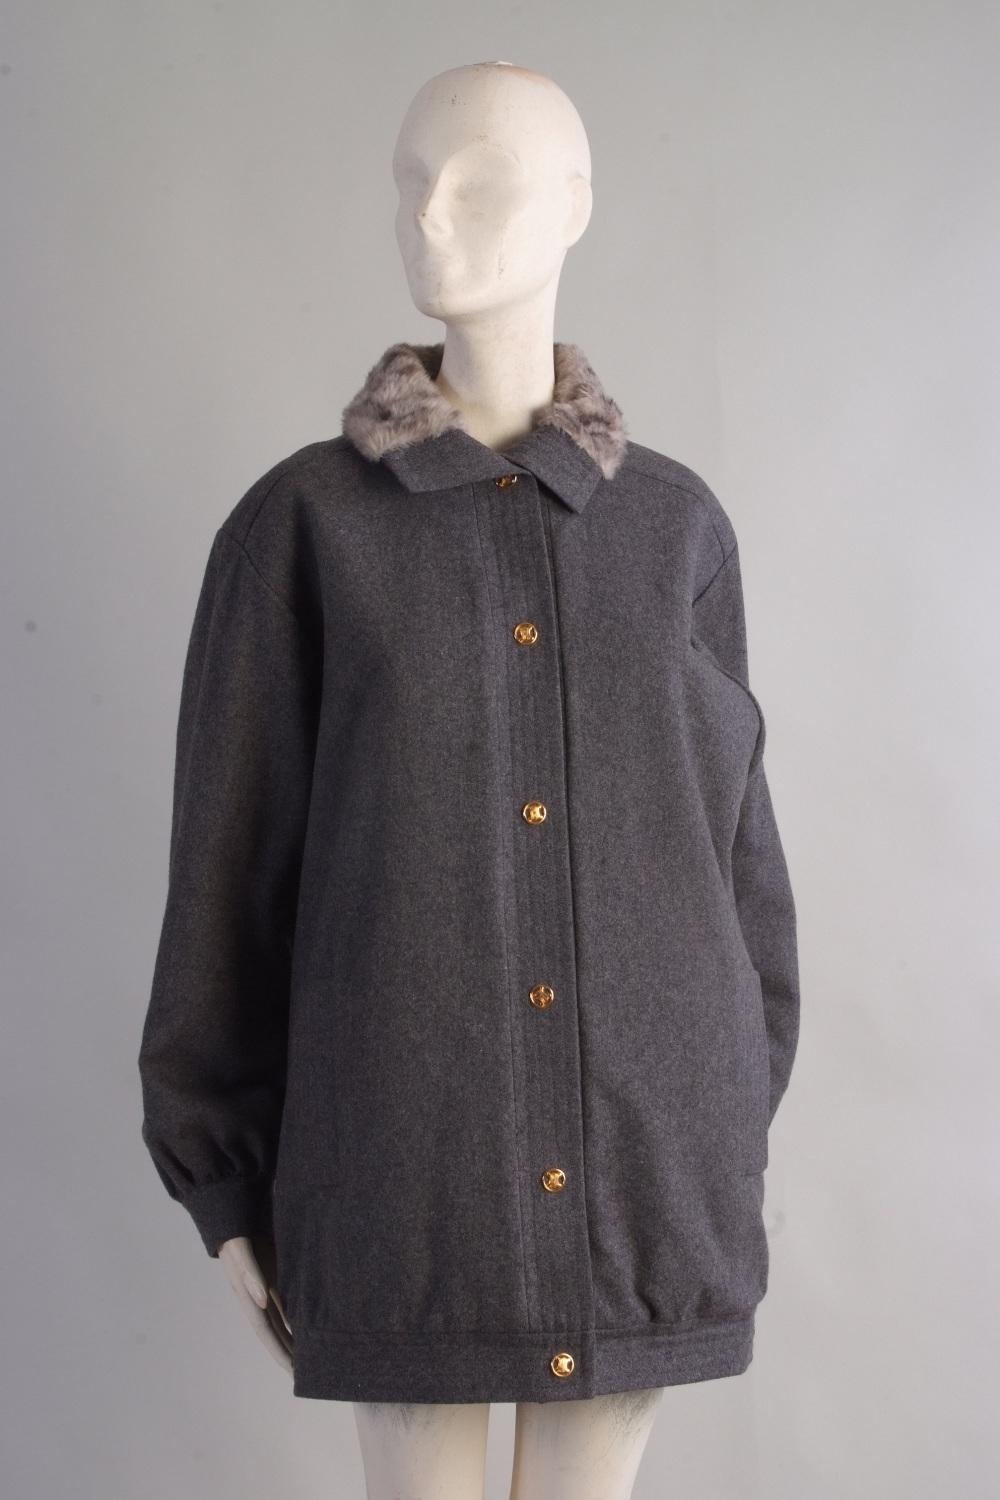 A 'Celine' Paris Grey wool coat with feu